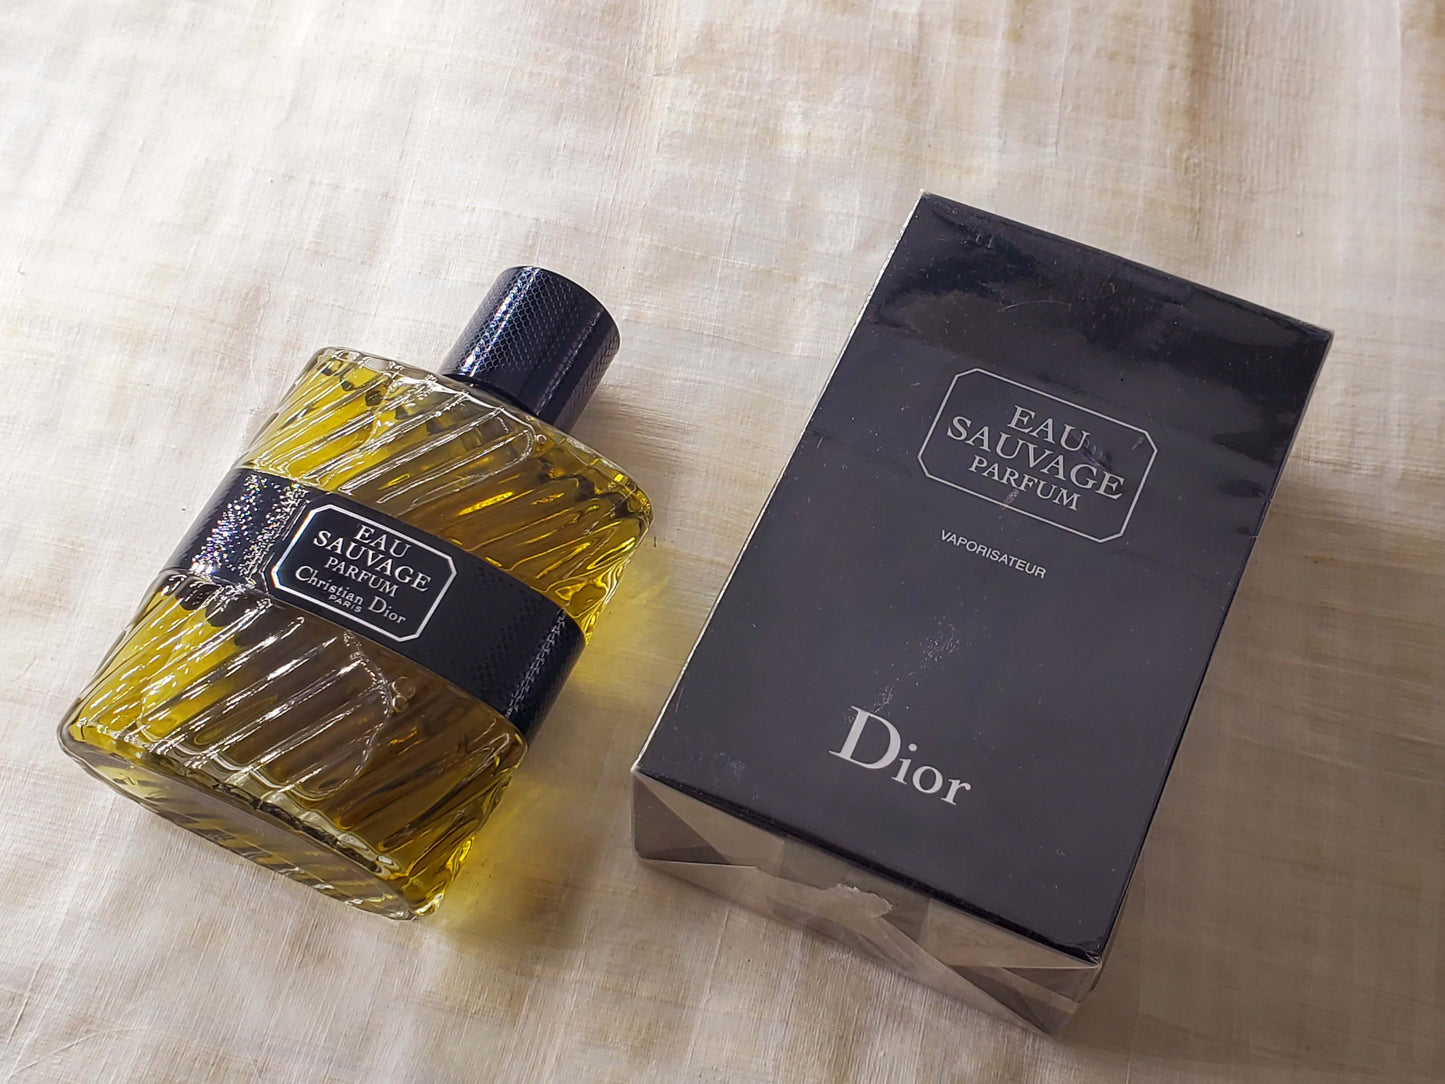 Christian Dior Eau Sauvage Parfum (First Edition) for men EDP Spray 100 ml 3.4 oz OR 50 ml 1.7 oz, Rare, Vintage